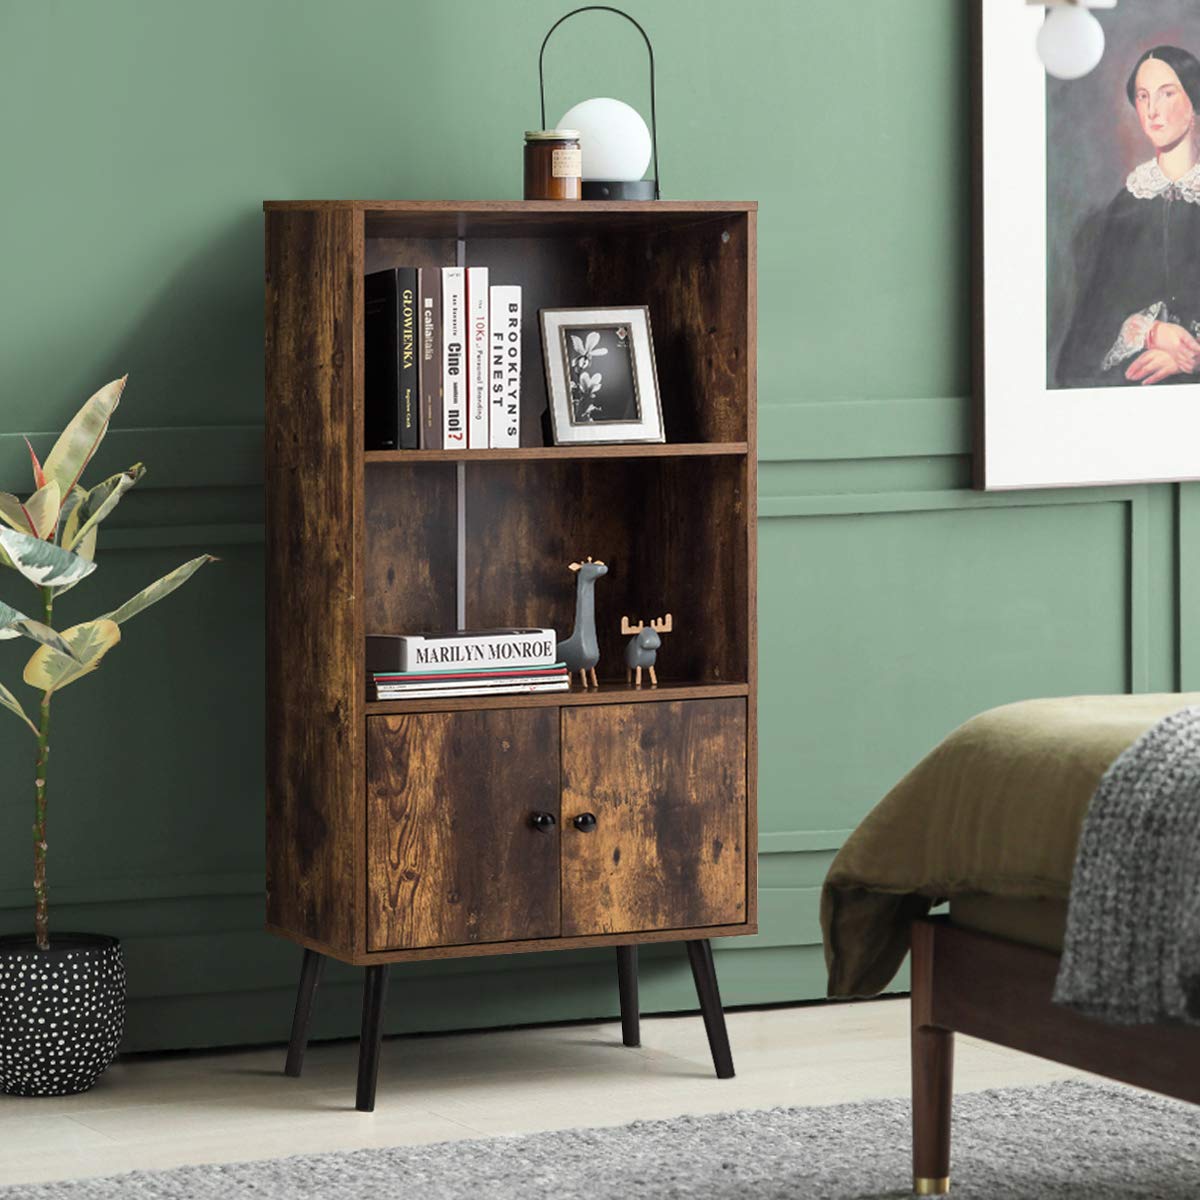 Tangkula Retro Bookcase, Industrial 2 Tier Bookshelf with Doors & Solid Wood Legs(Rustic Brown)